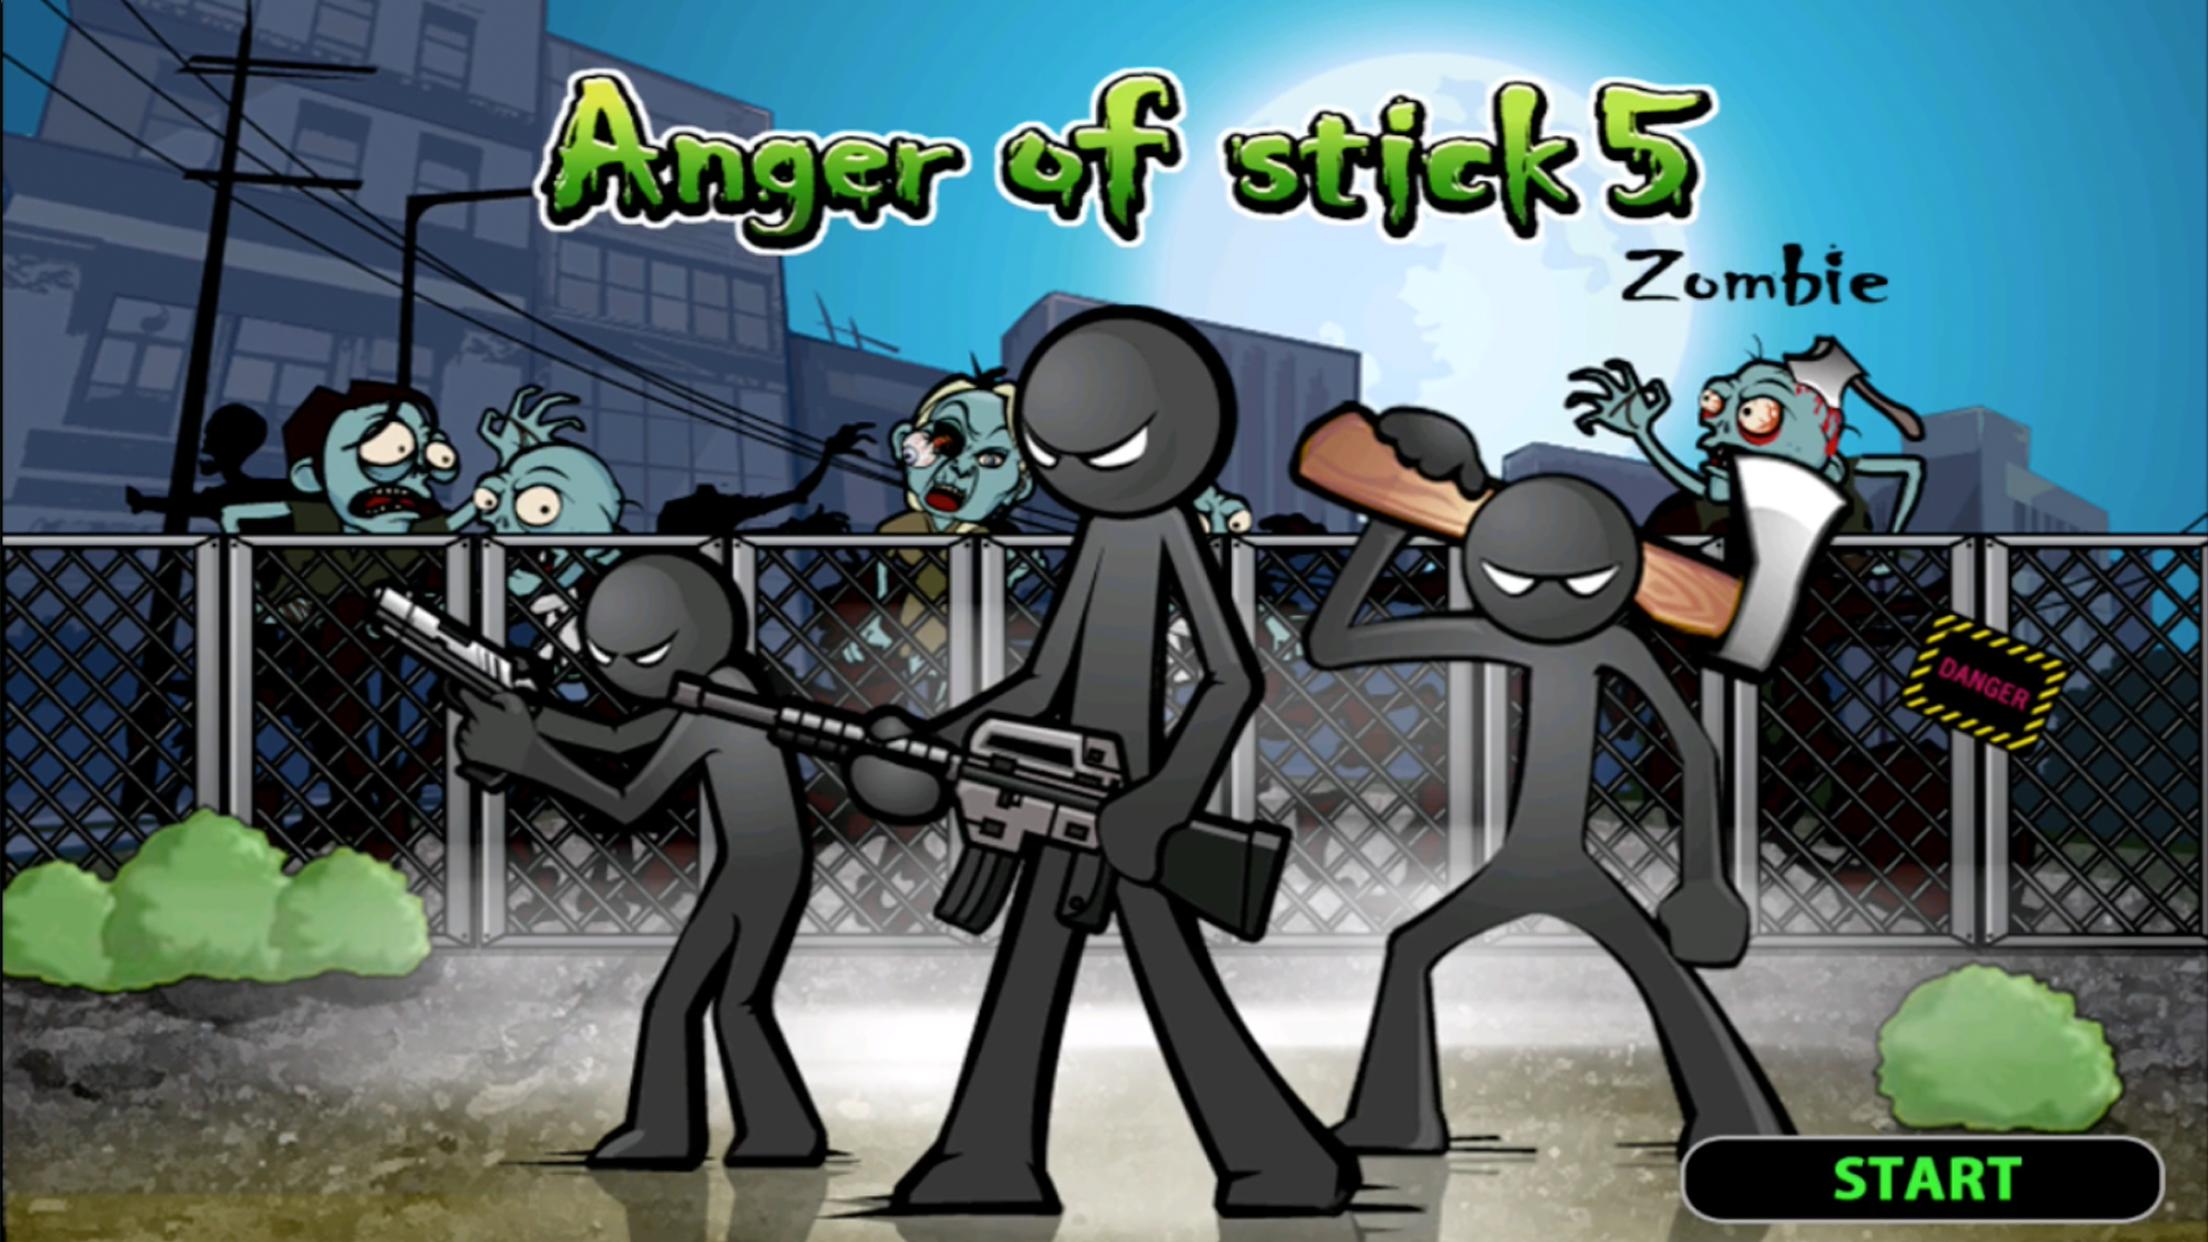 Игра Ангер оф стик 5. Ангер оф стик 5 зомби. Игра Anger of Stick 5 Zombie. Черные человечки игра. Человечки против зомби